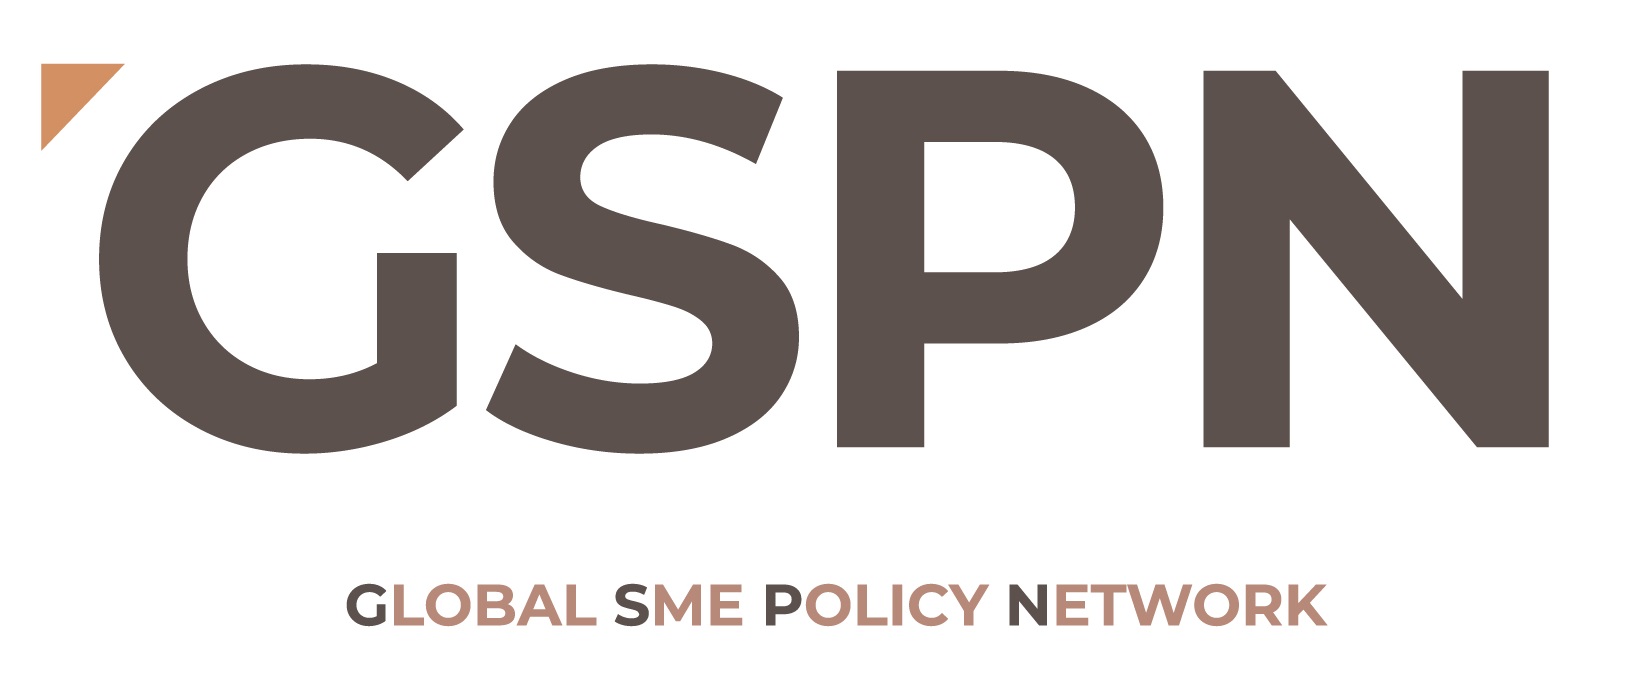 Global SME Policy Network Logo